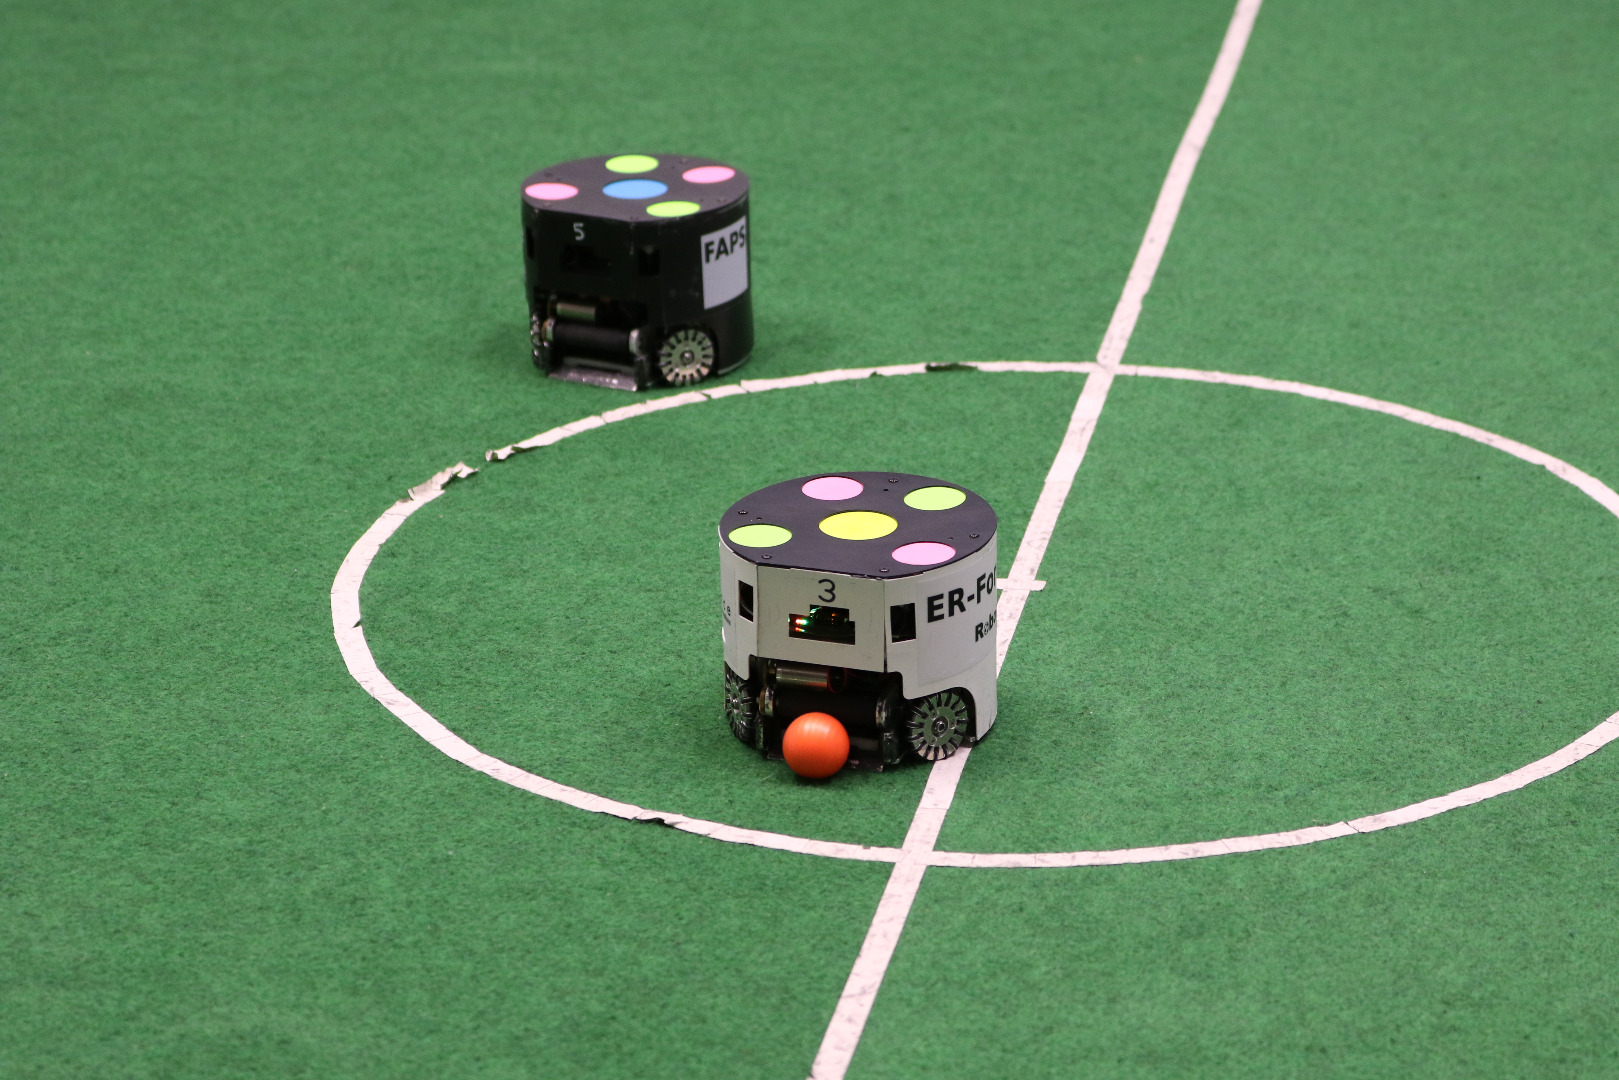 NdW mit Robo-Fußball. Bild: Heizo Takamatsu